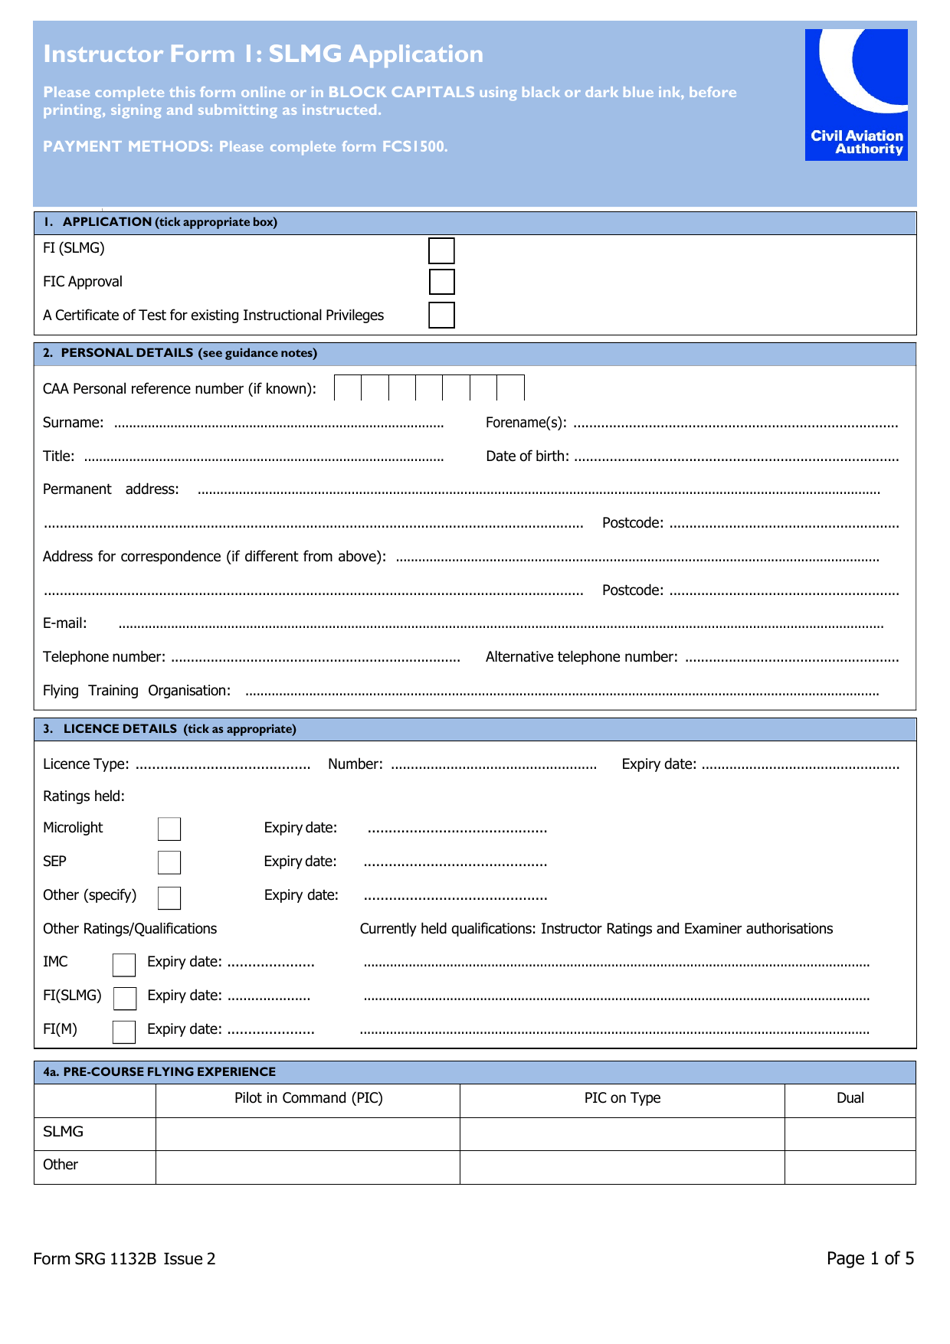 Instructor Form 1 (SRG1132B) Slmg Application - United Kingdom, Page 1